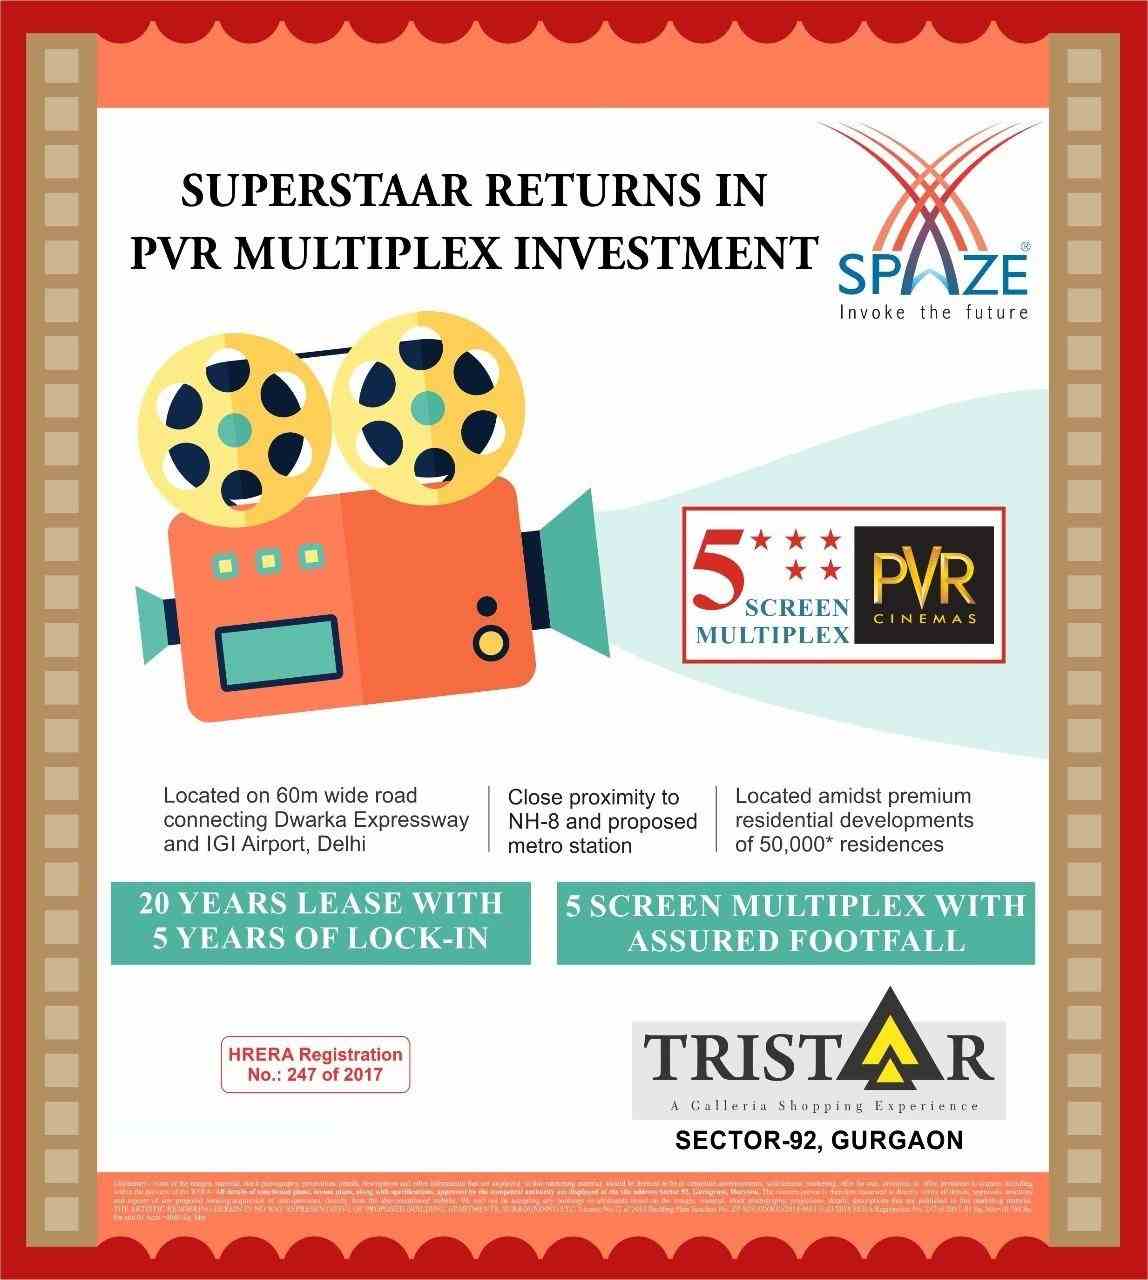 Superstaar returns in PVR Multiplex investment at Spaze Tristaar in Gurgaon Update